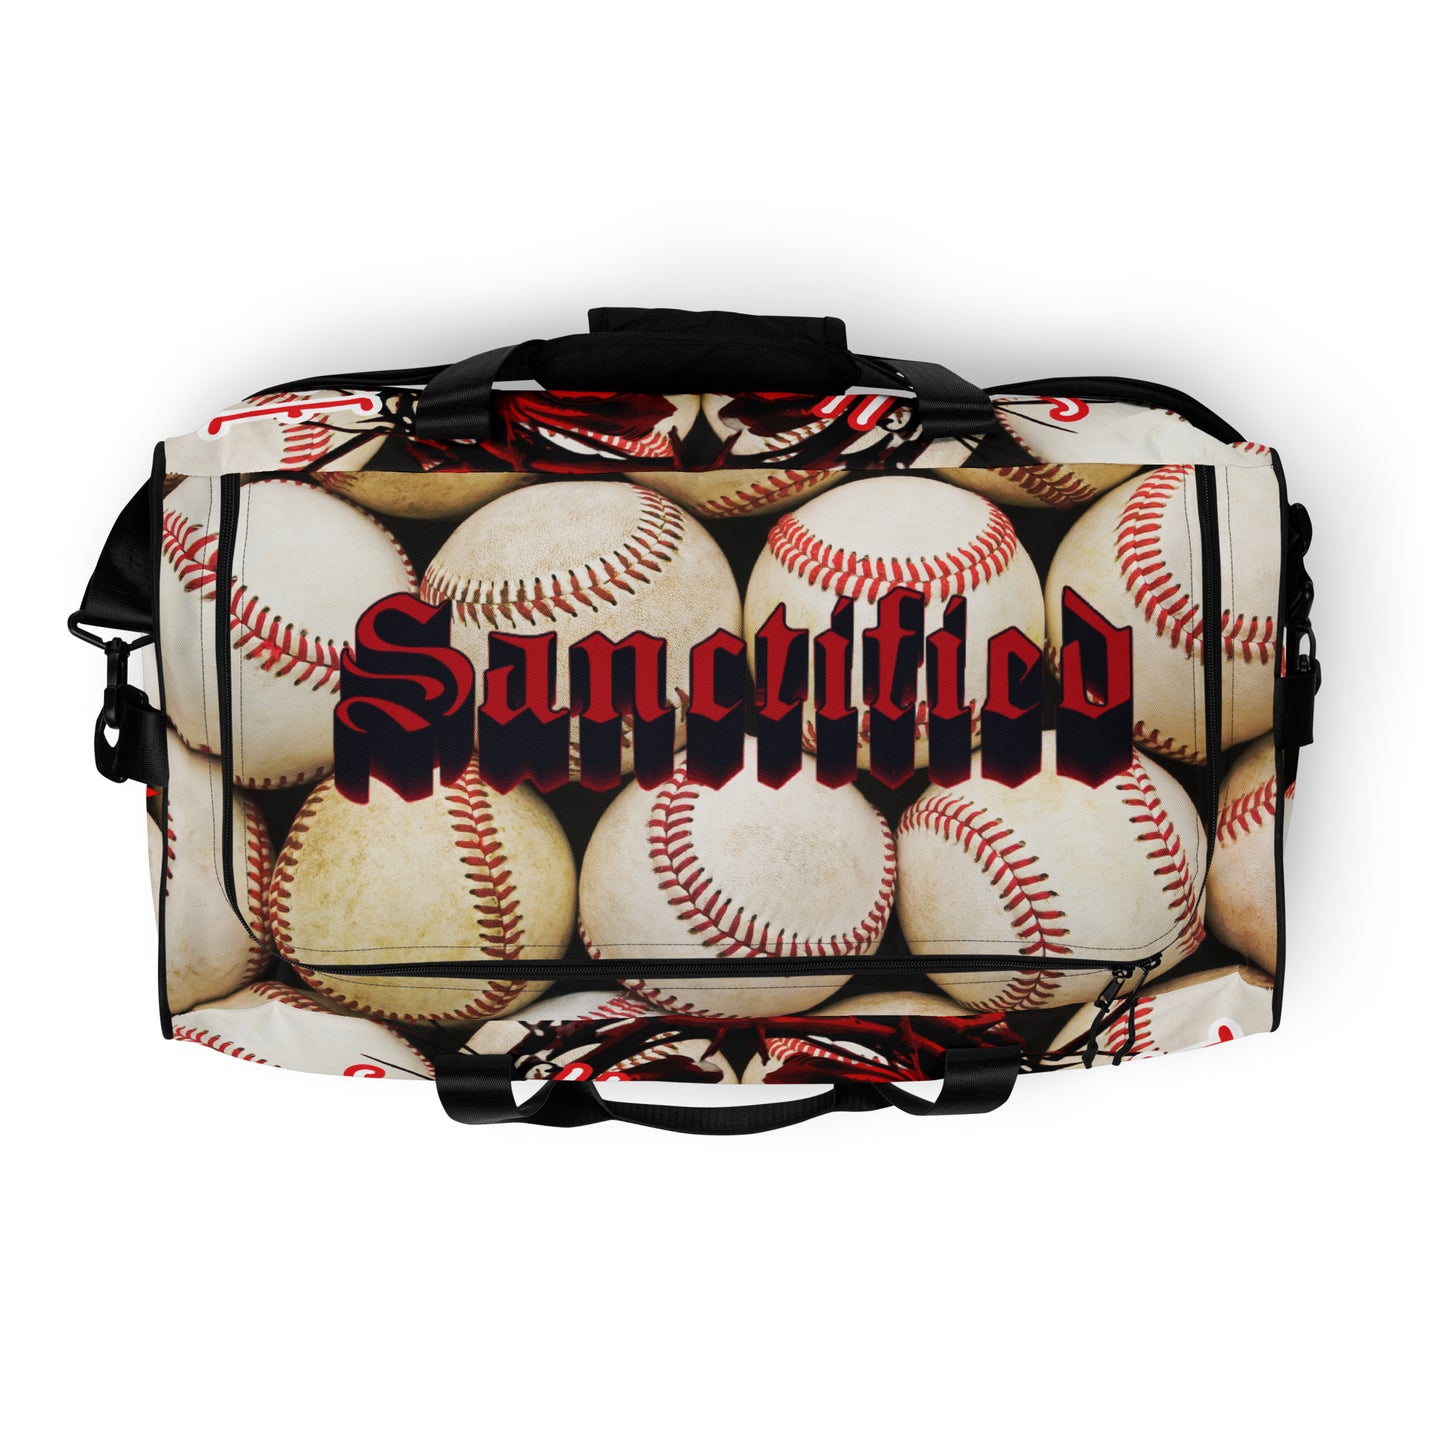 Jesus Fan 4Life- Baseball Duffle bag